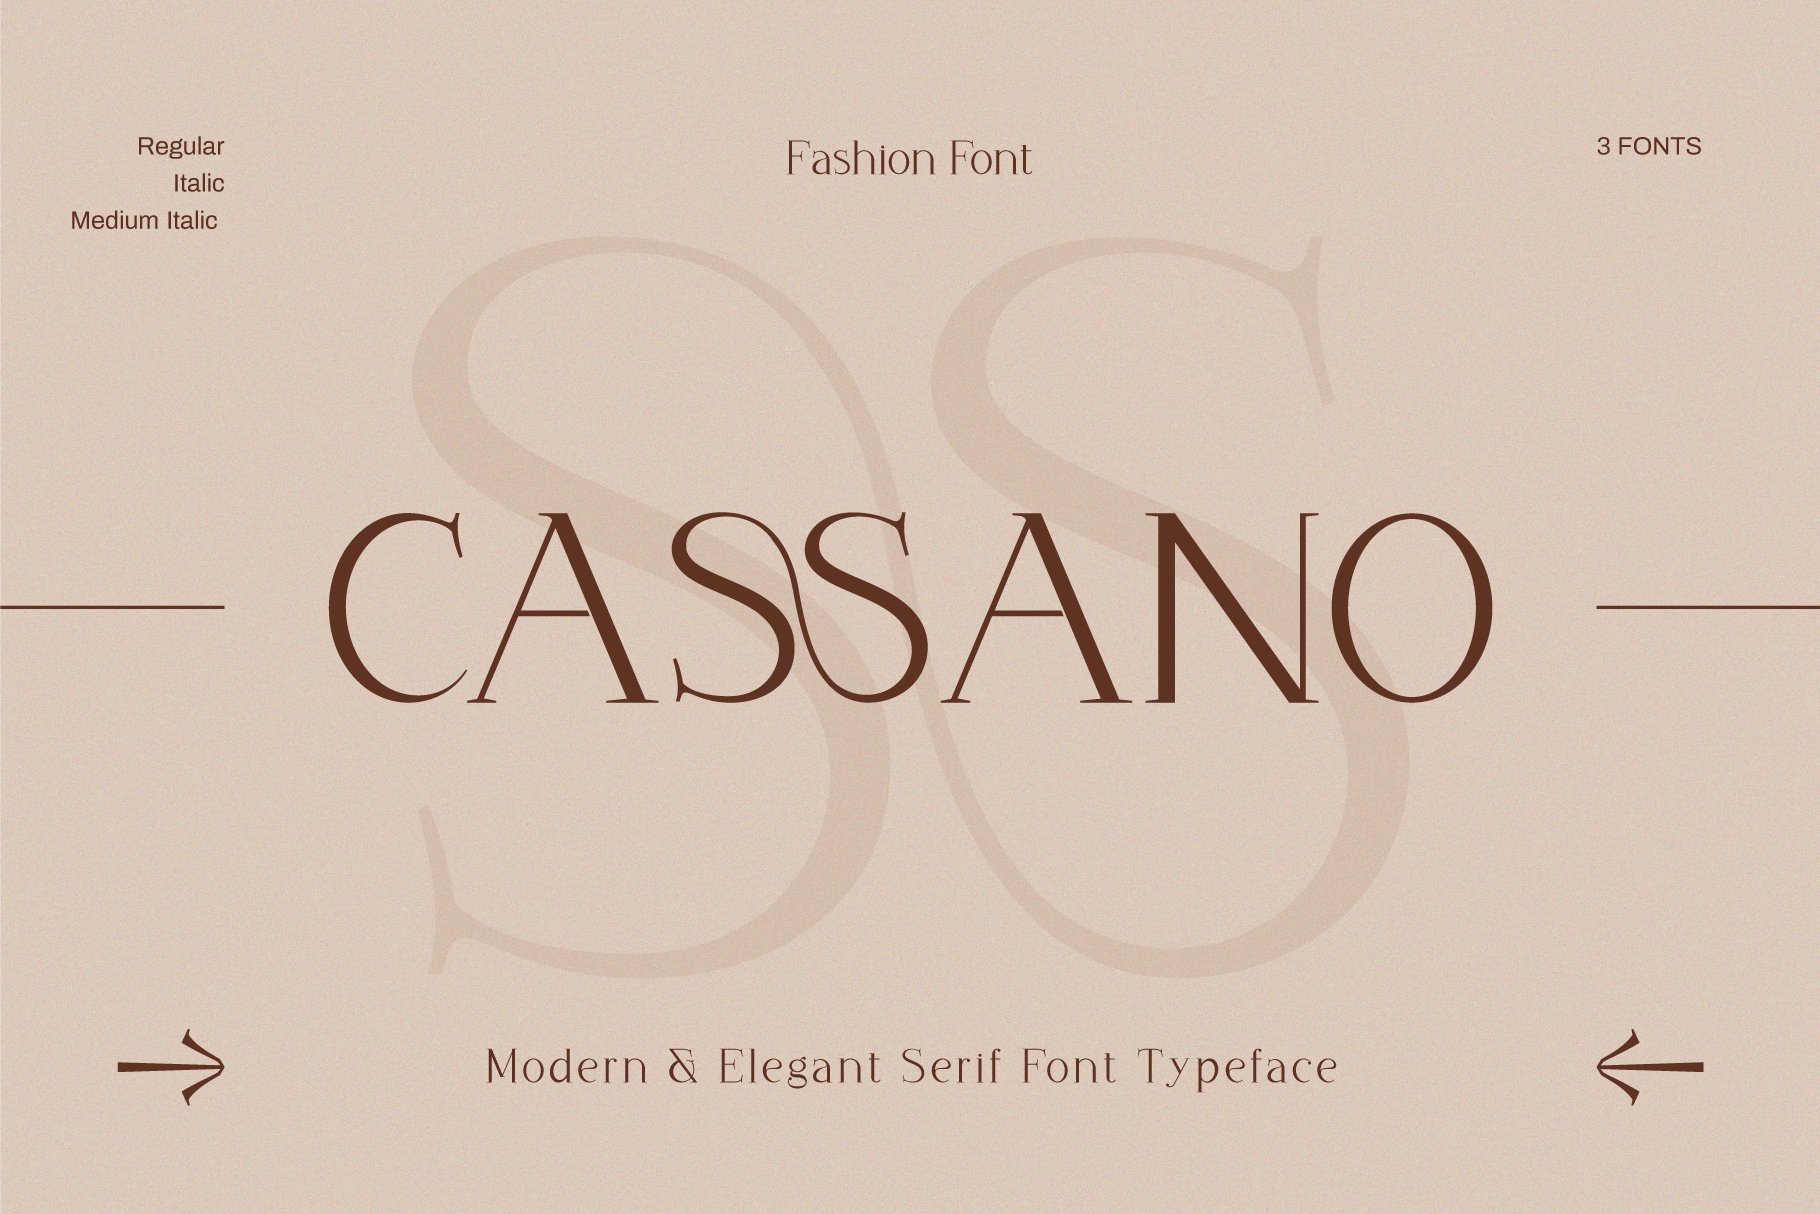 Cassano - Modern Serif Typeface cover image.